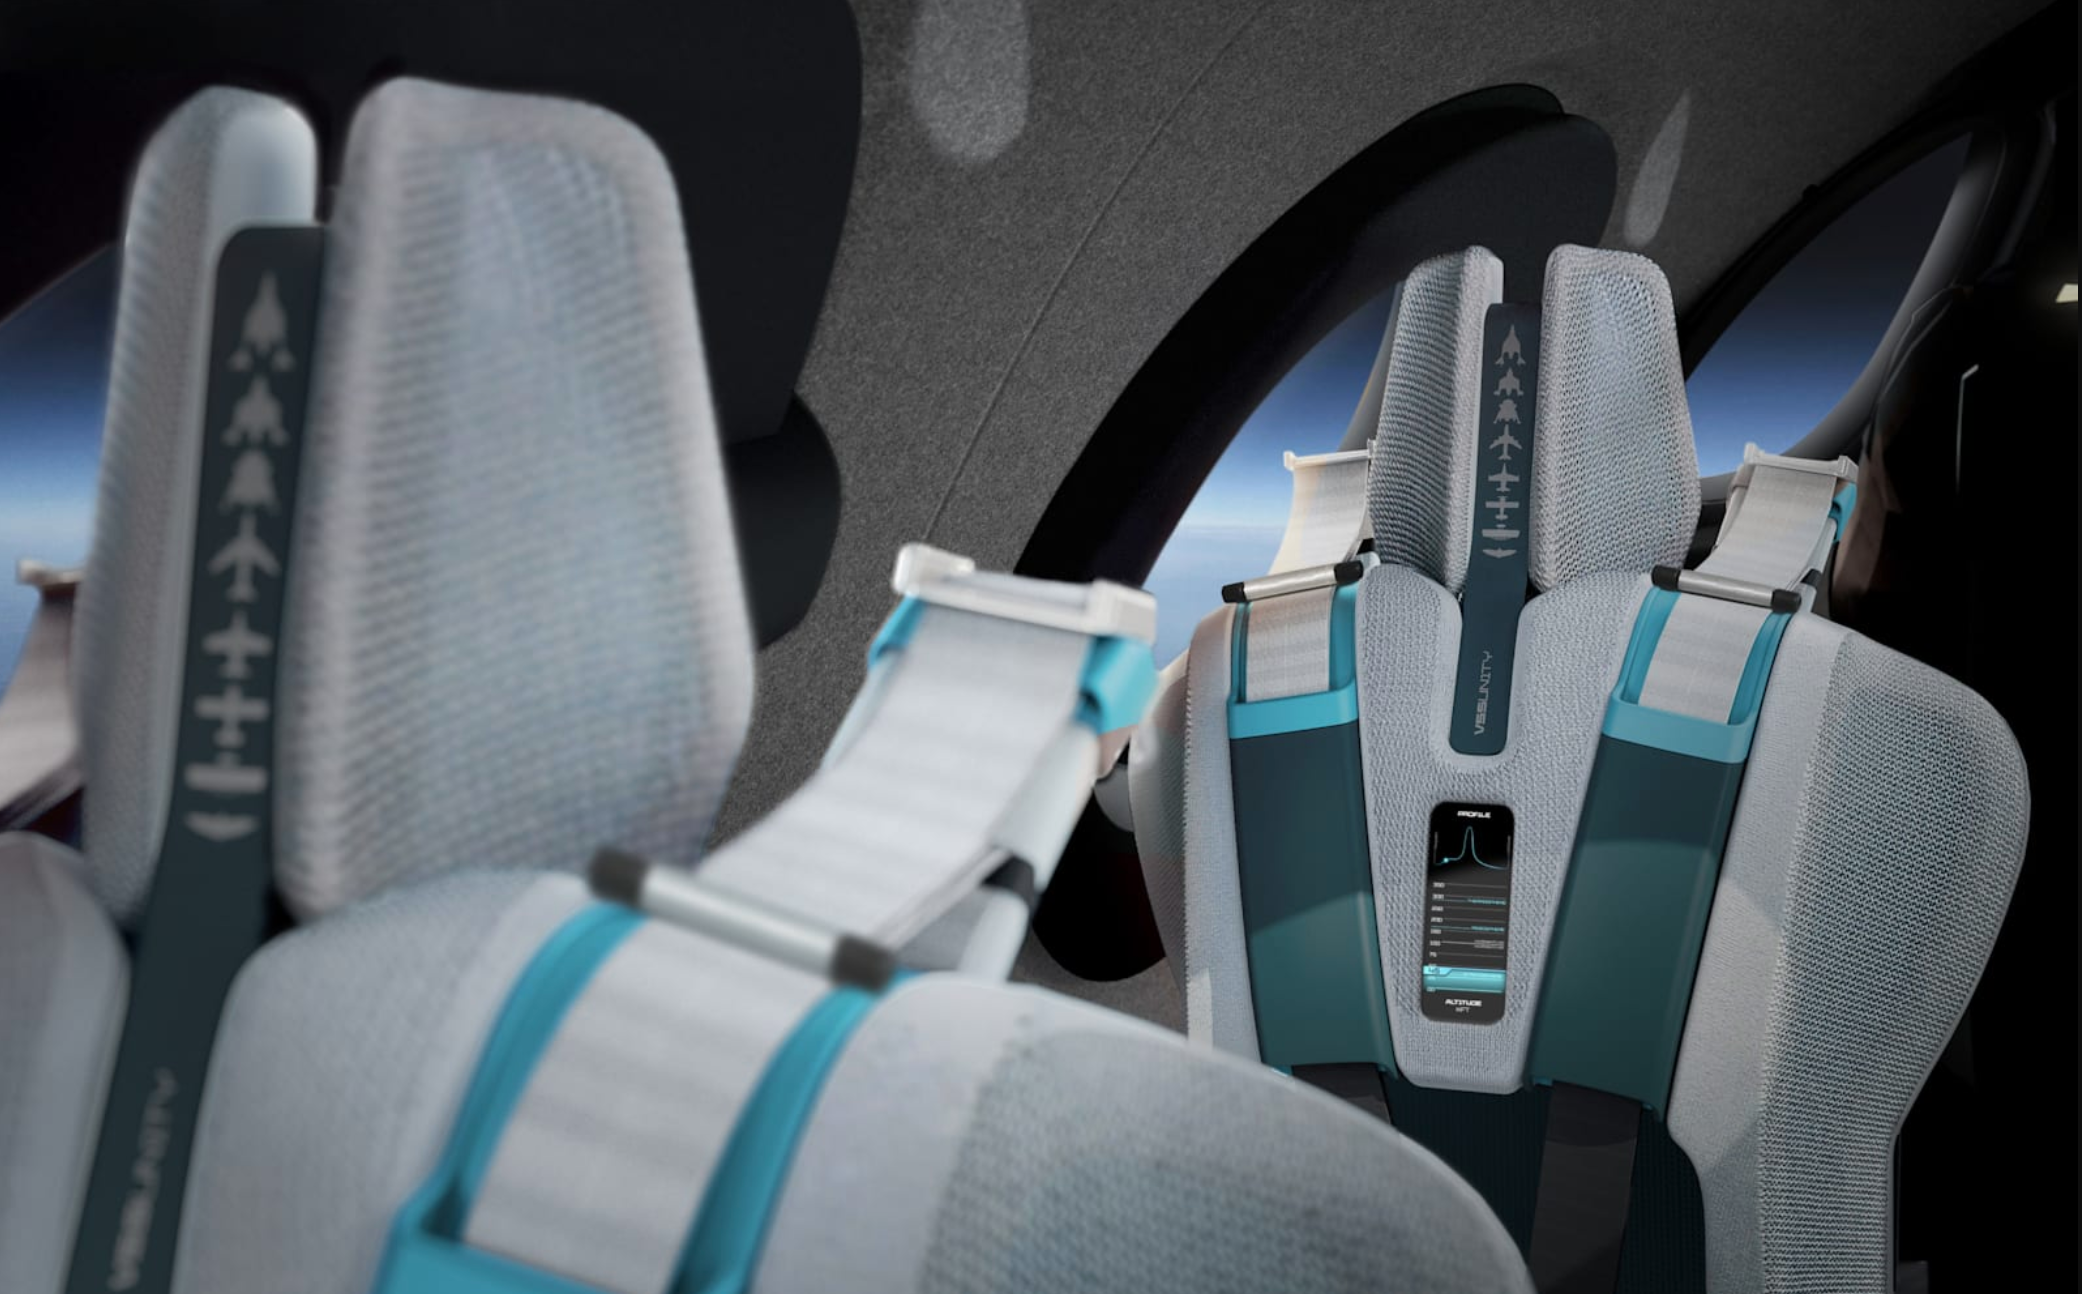 Photo of Virgin Galactic's interior spaceship cabin seats